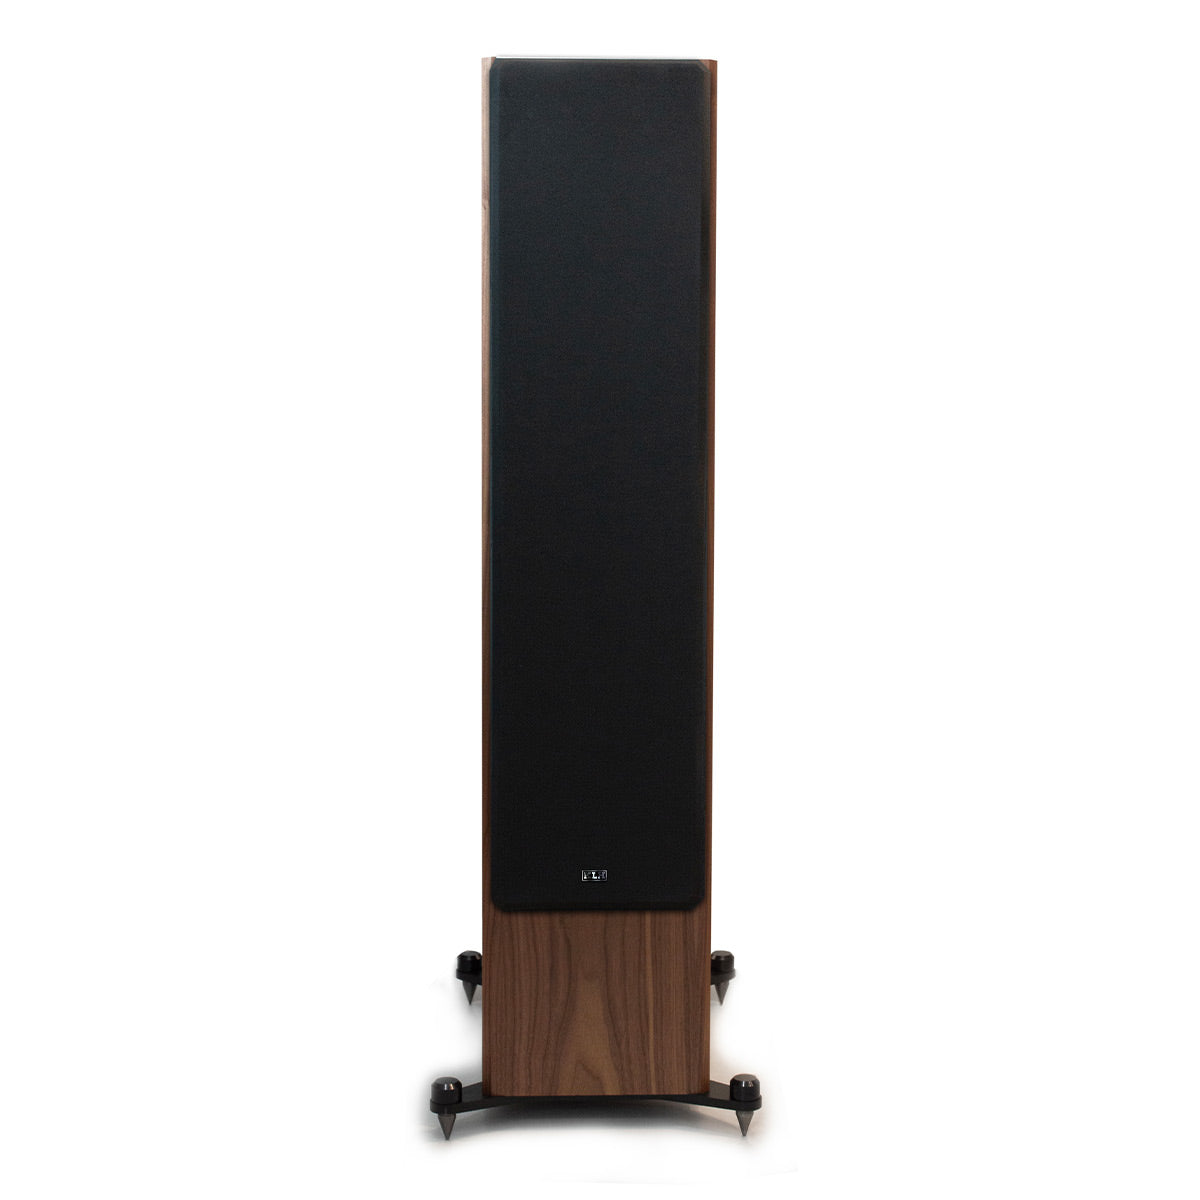 KLH Kendall 2F 3-Way Floorstanding Speaker - Each (English Walnut)